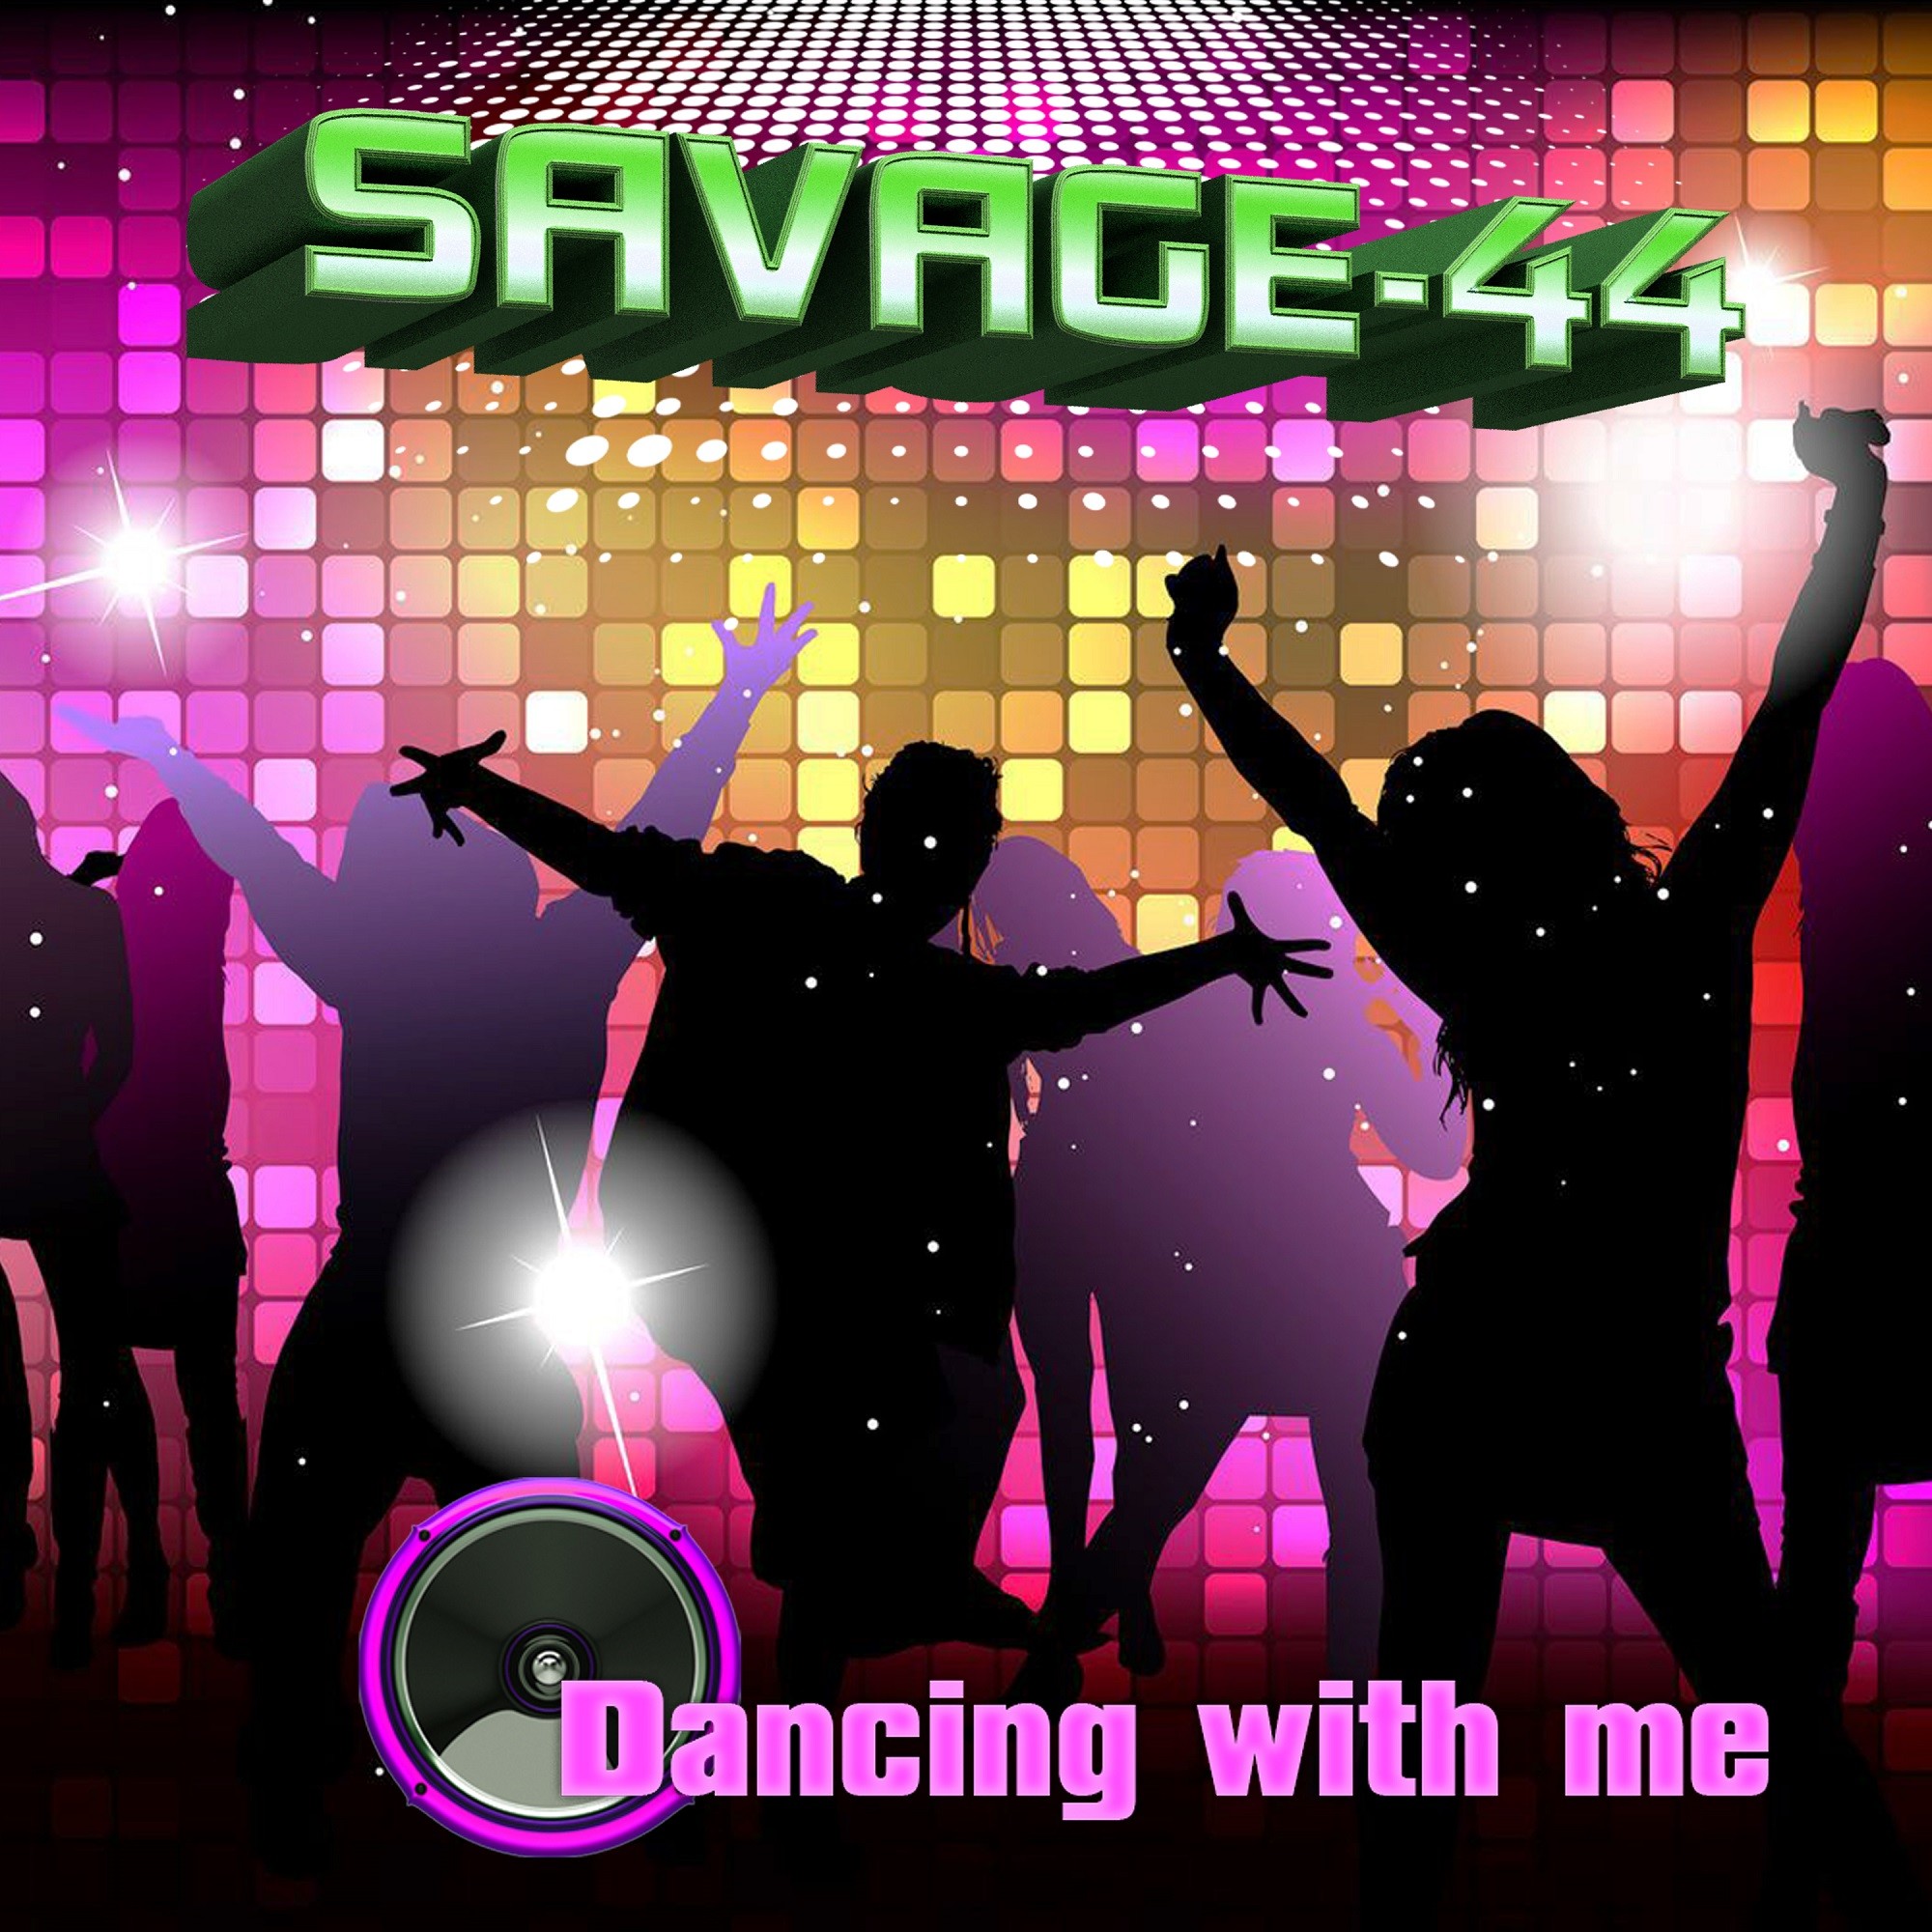 Savage 44 Dance. Savage 44. Savage-44 - the first Dance.. Savage 44 dance party